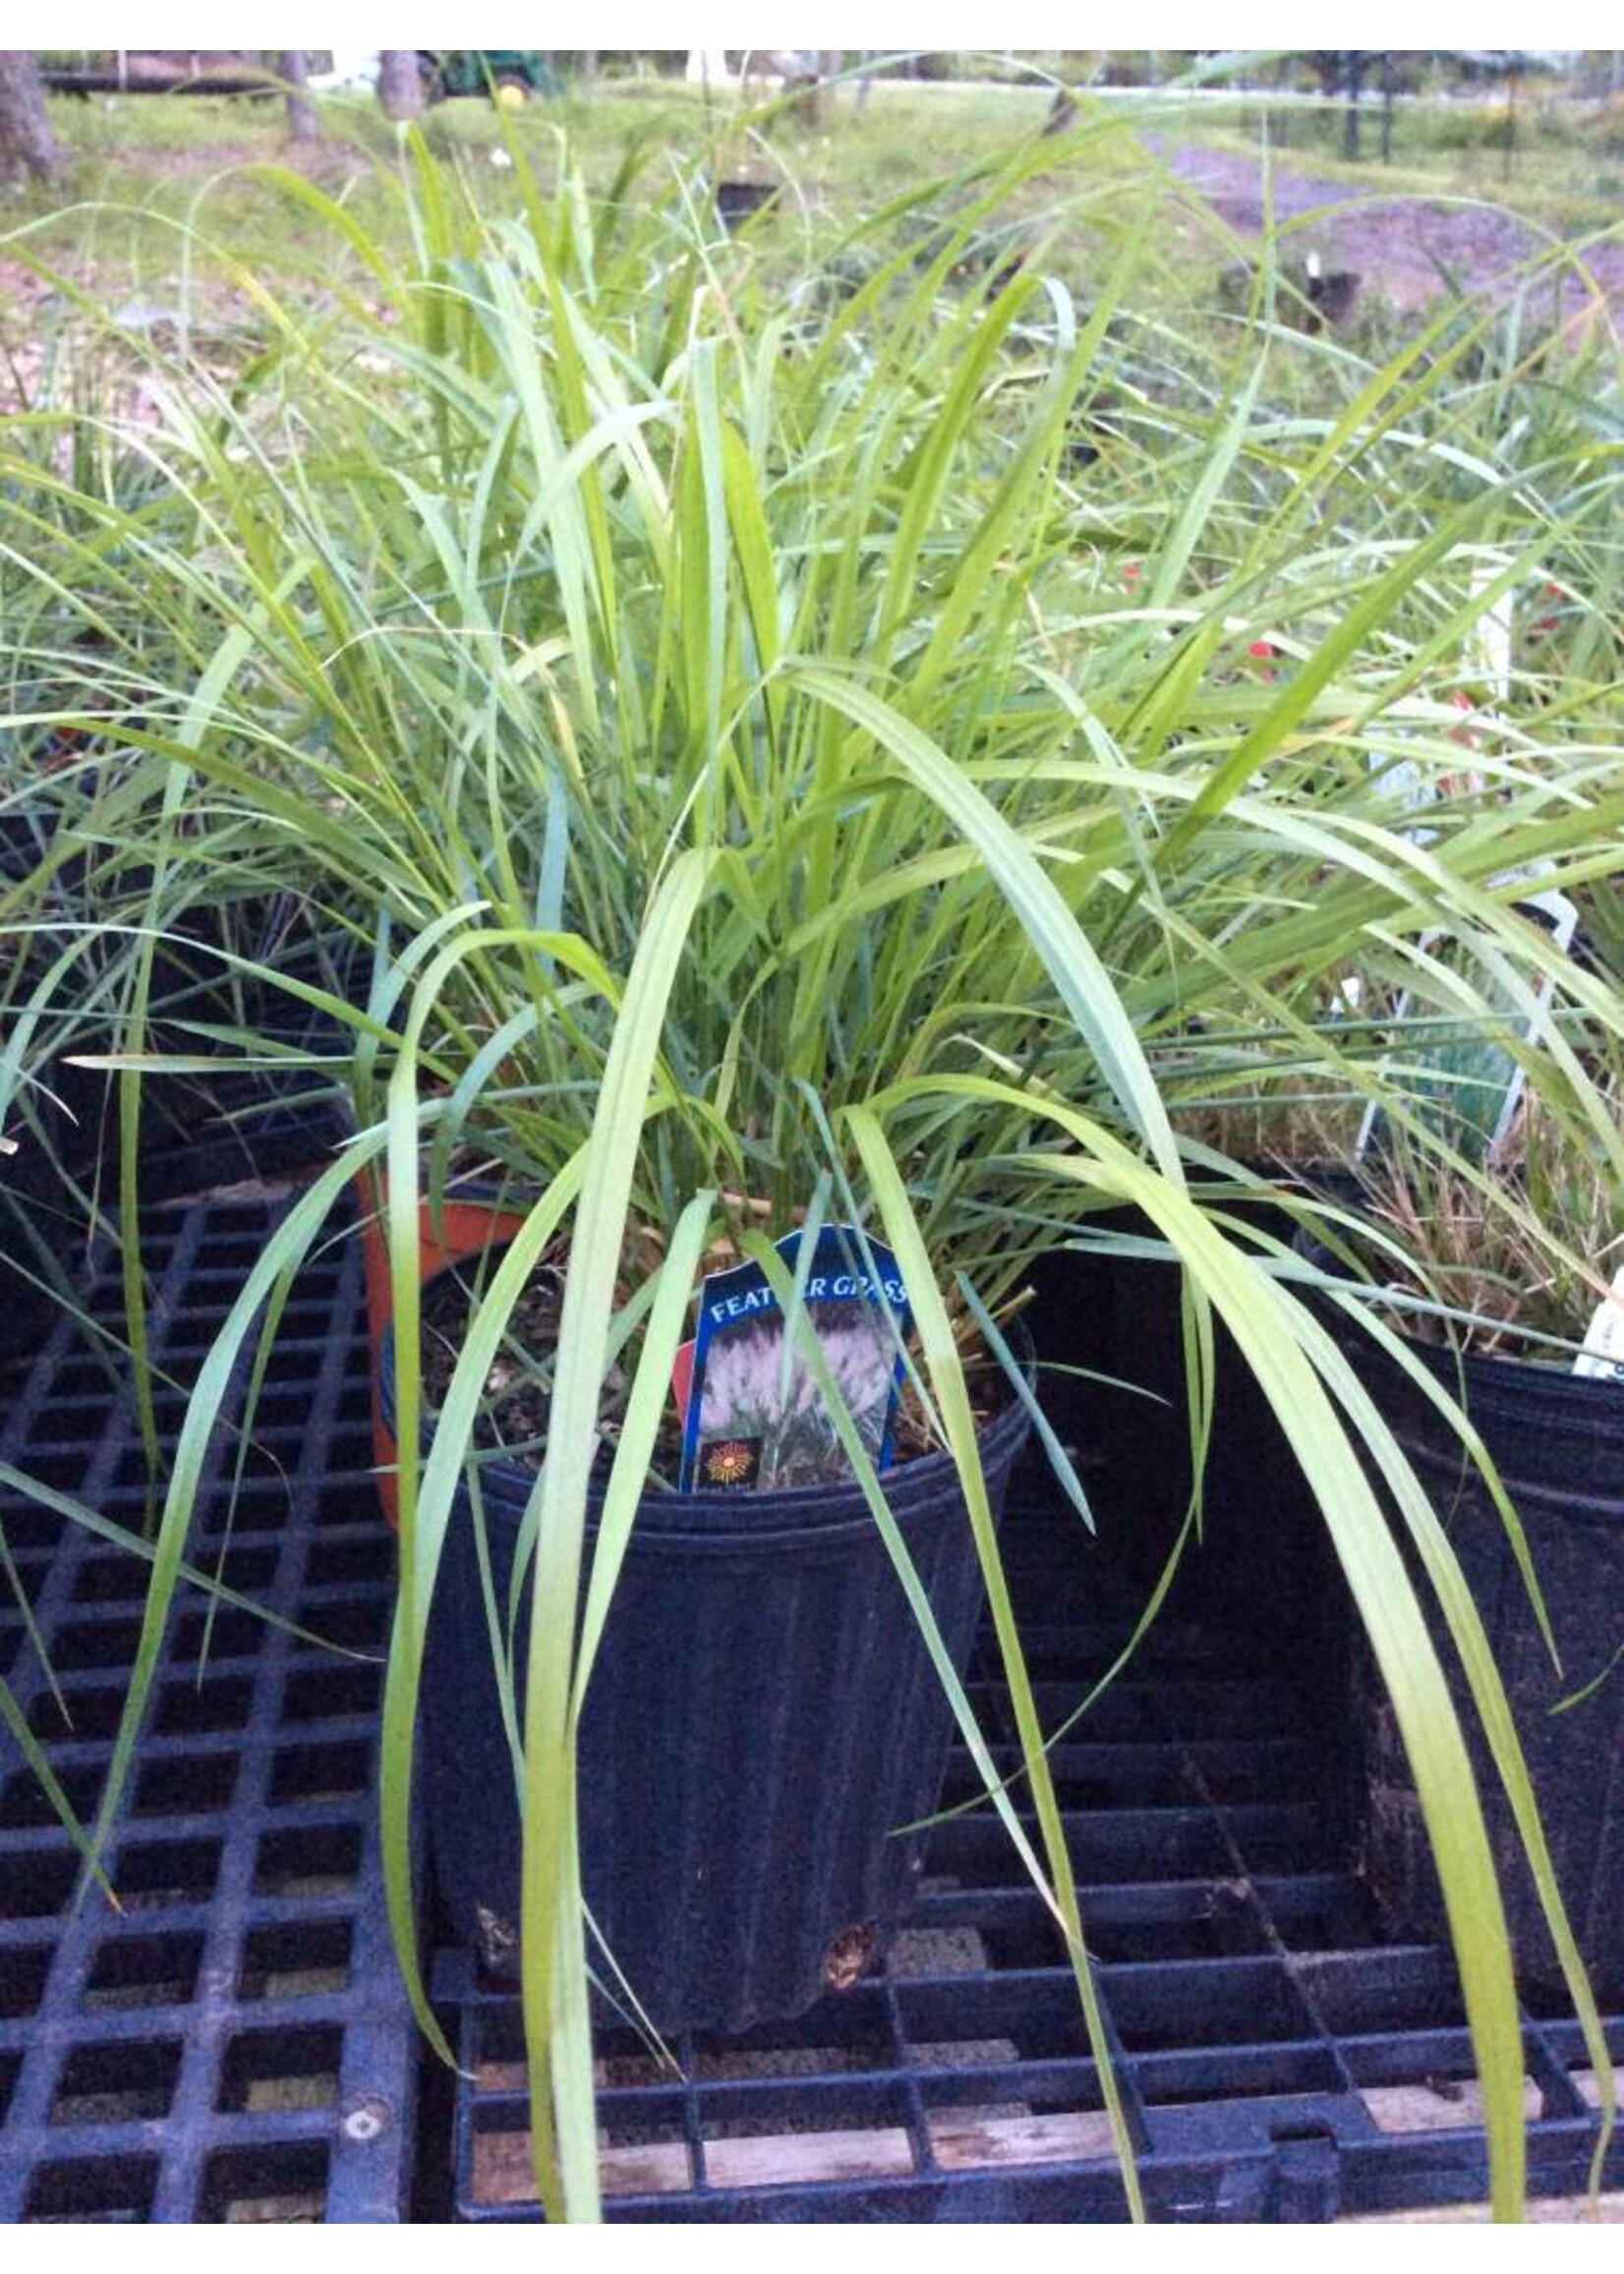 Rain Garden Calamagrostis brachytricha Grass -  Ornamental Feather Reed, #1